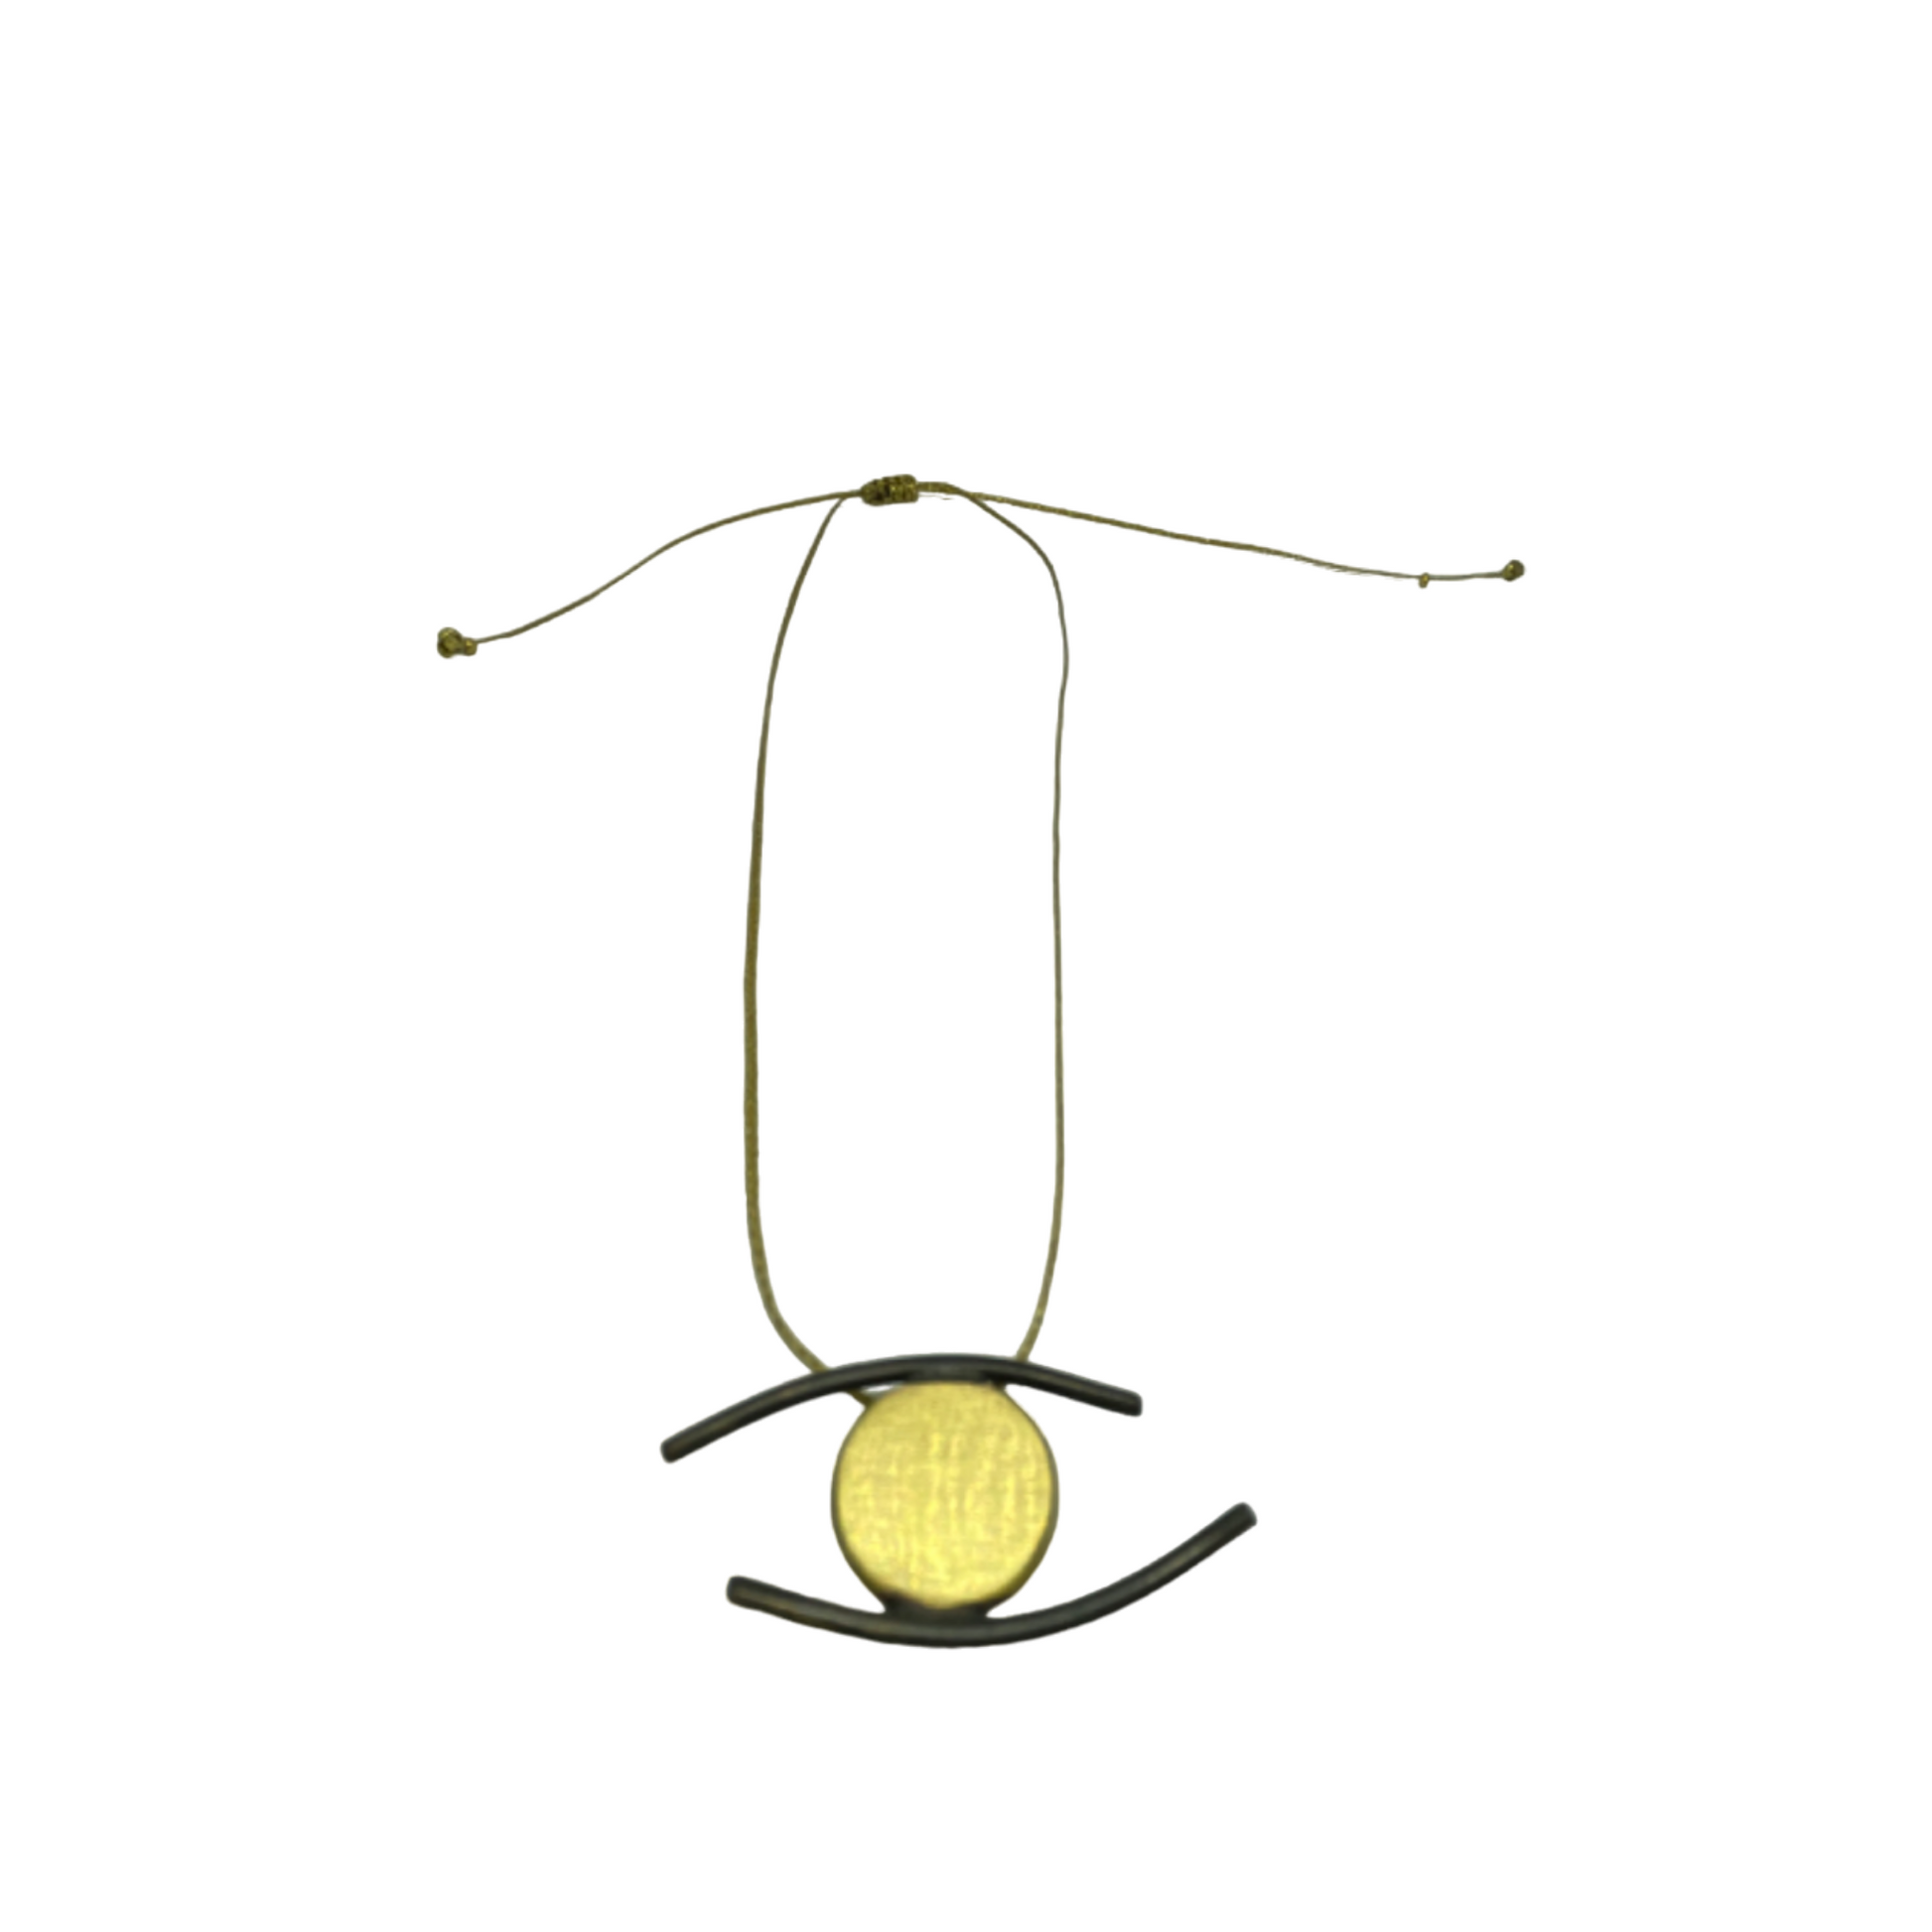 Oxidised brass necklace | Black - Yellow Mataki Necklace - CURIUDO